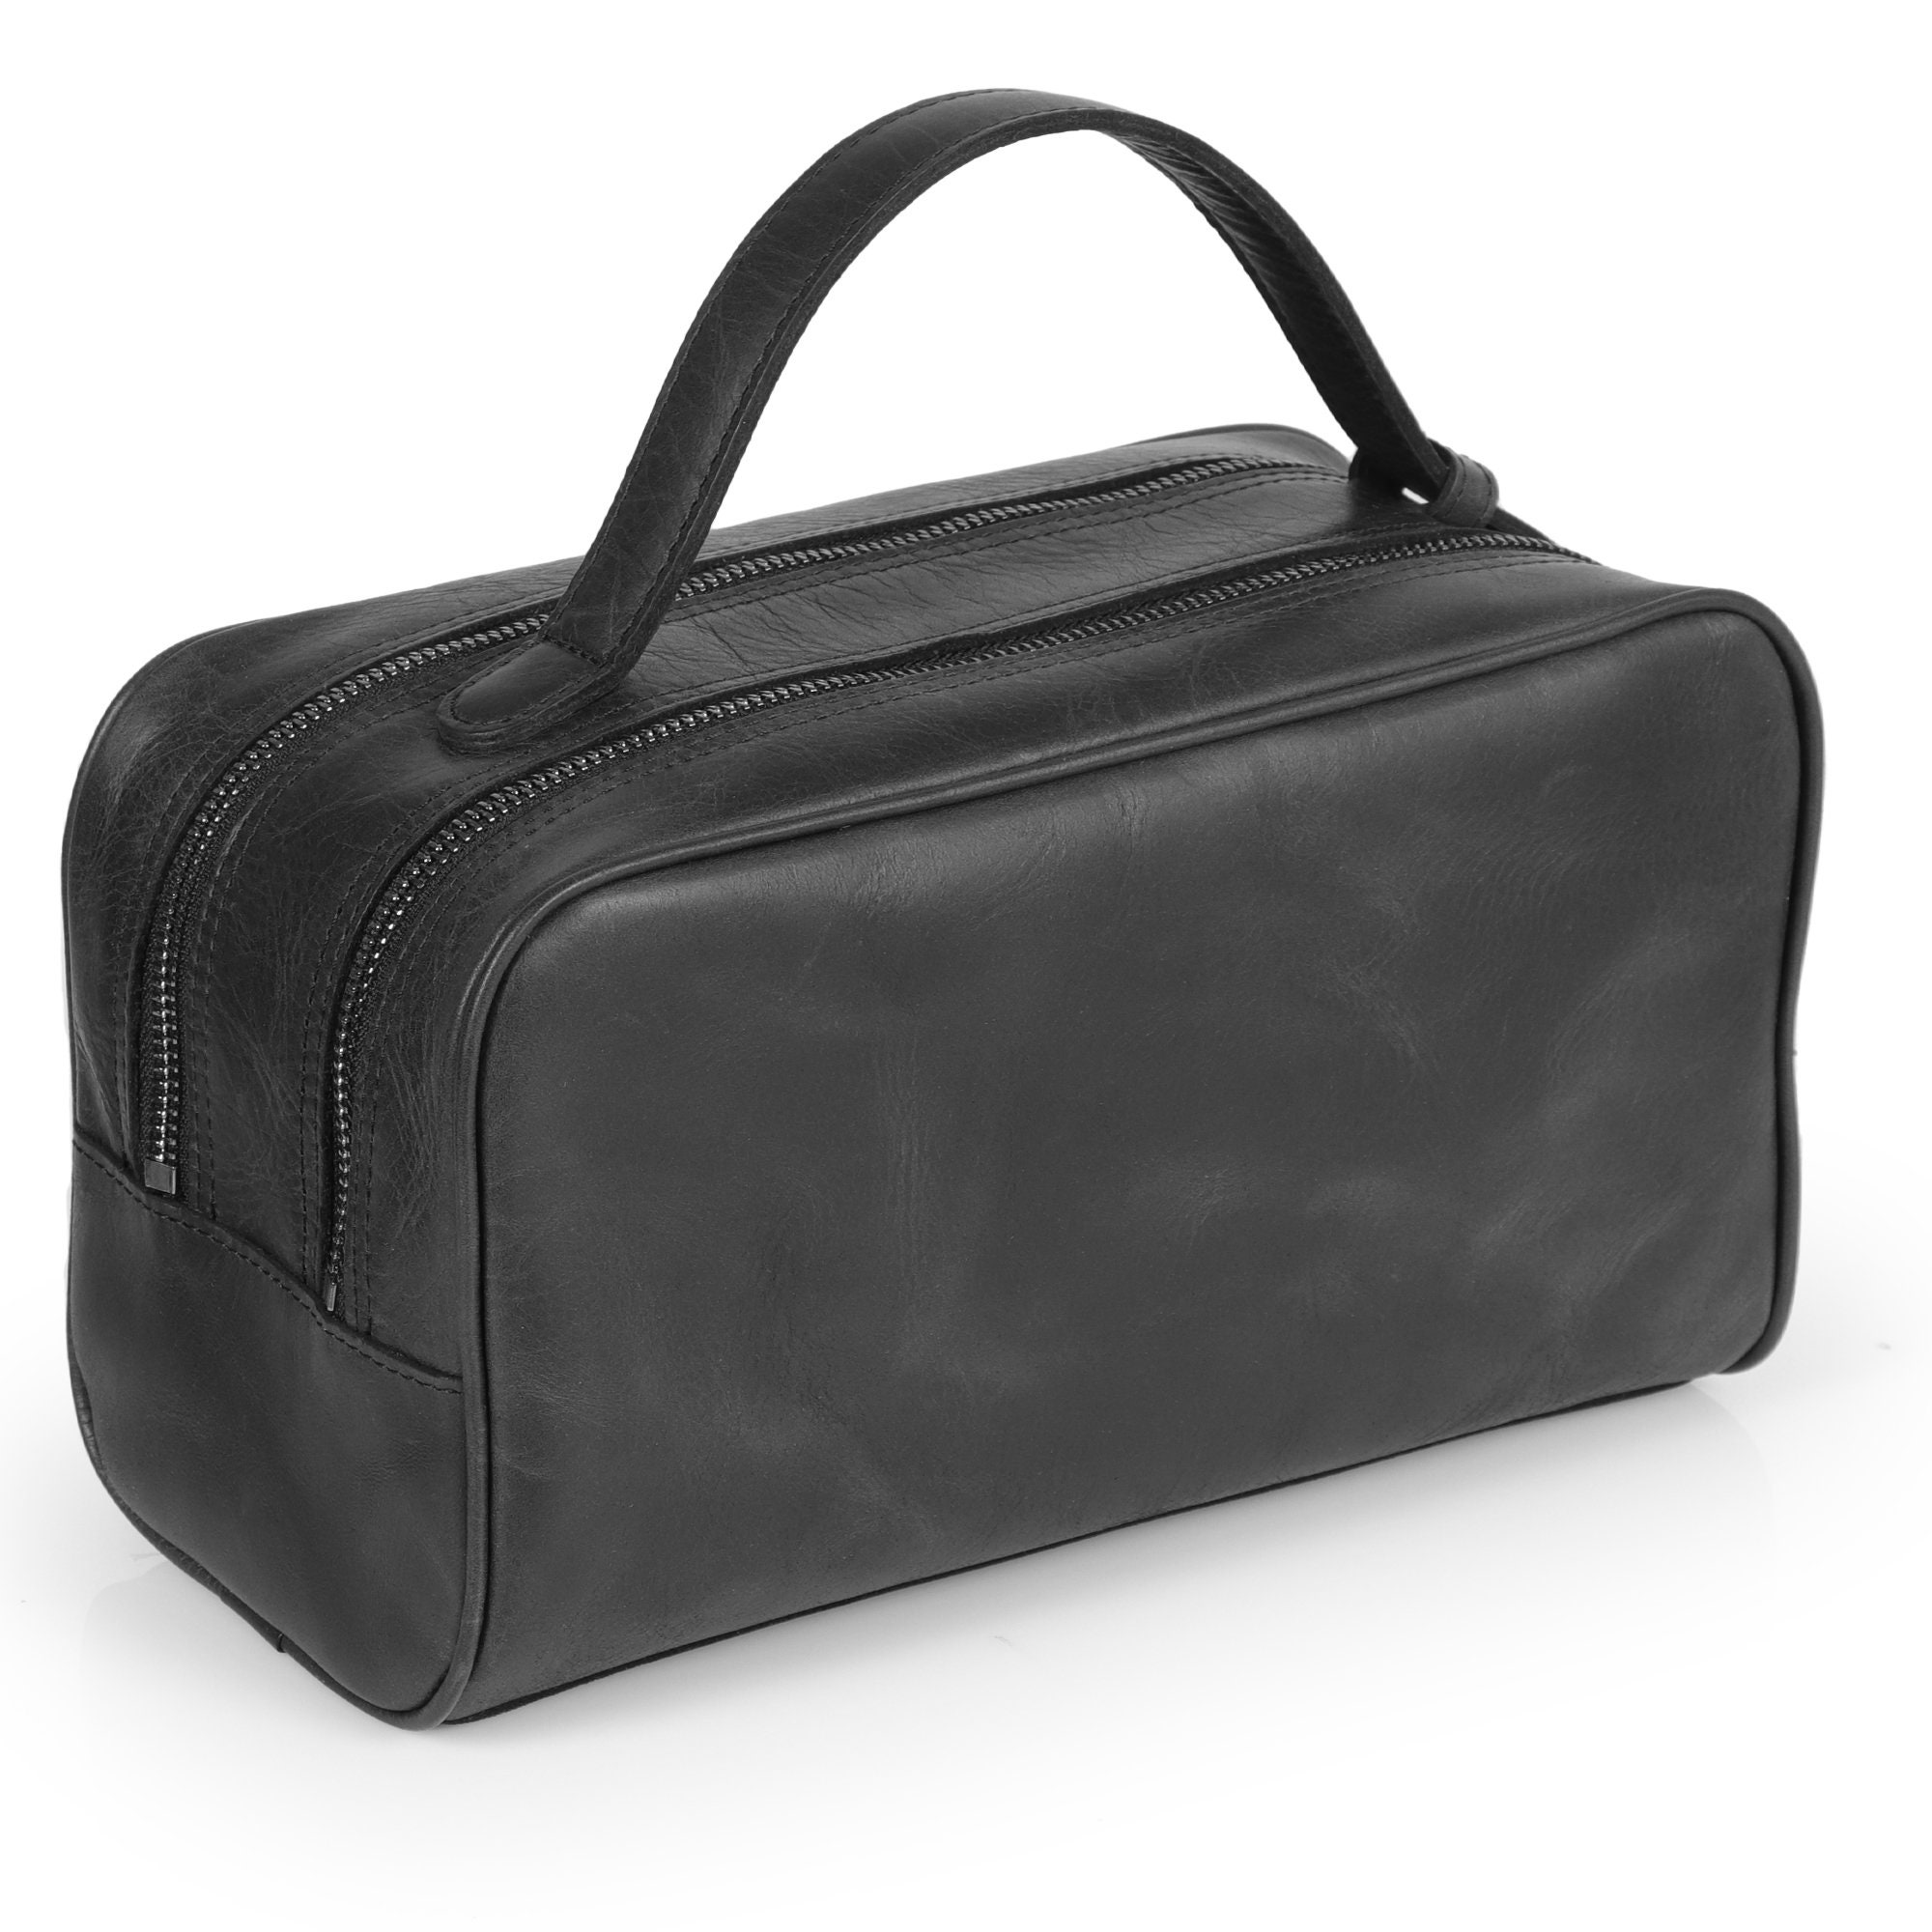 The Toiletry Bag - Men's Top Grain Leather Travel Bag